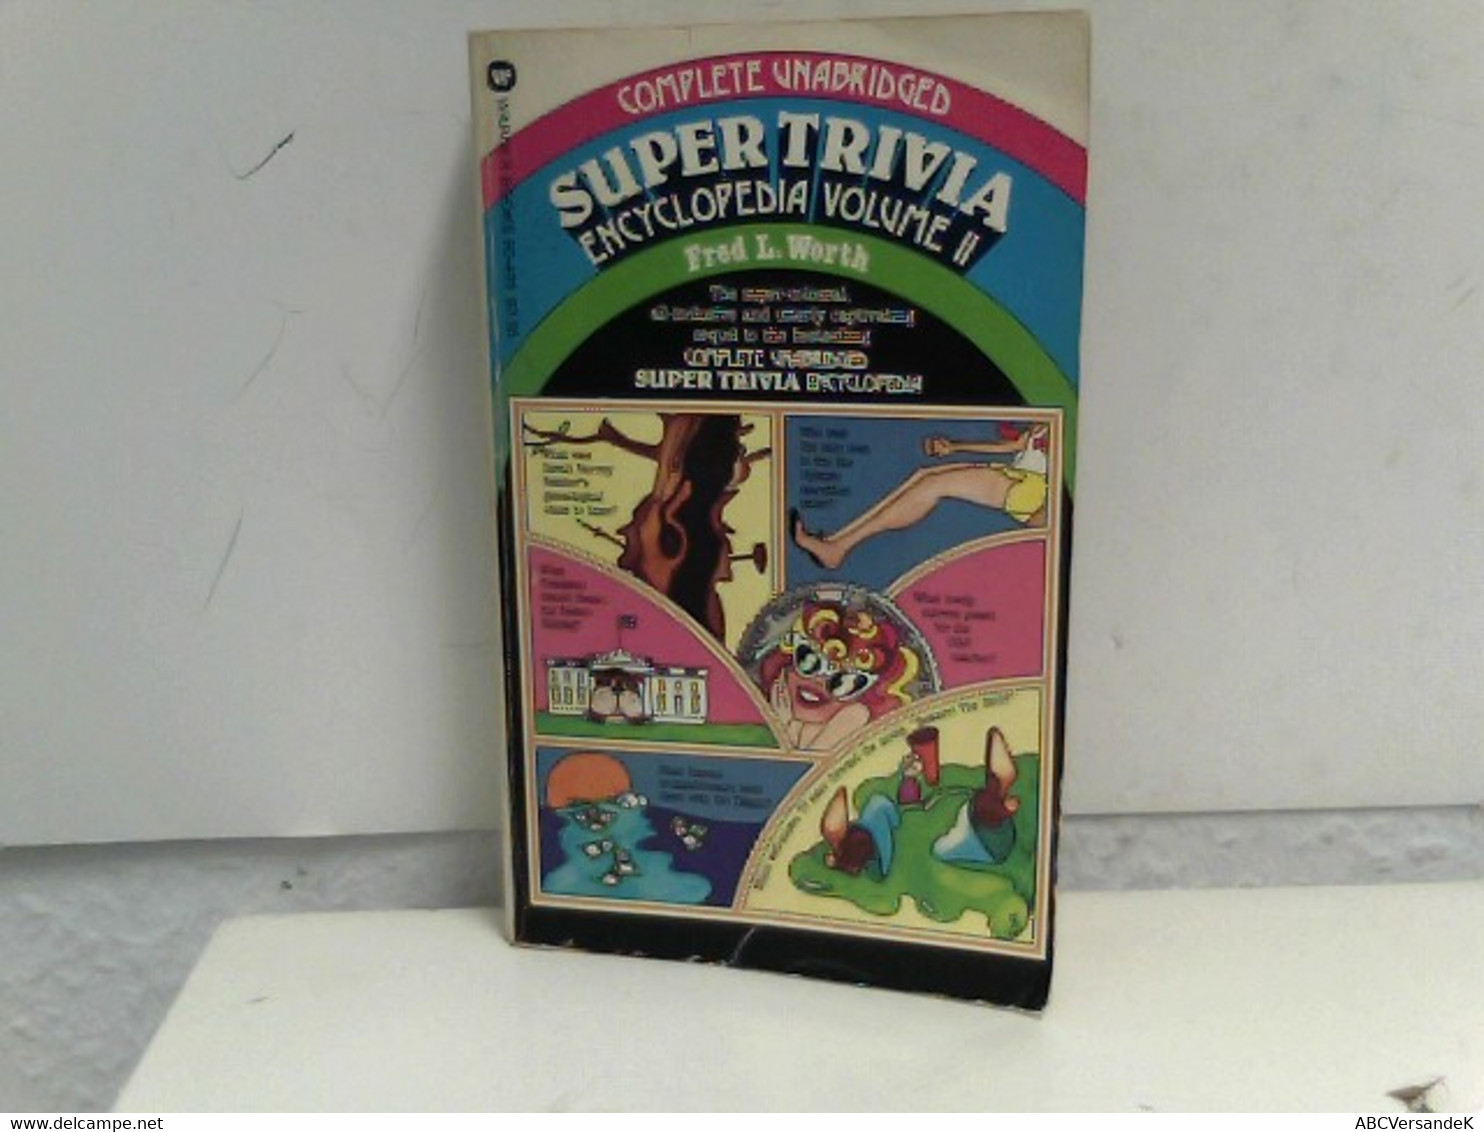 The Complete Unabridged Super Trivia Encyclopedia Volume II. - Lexika